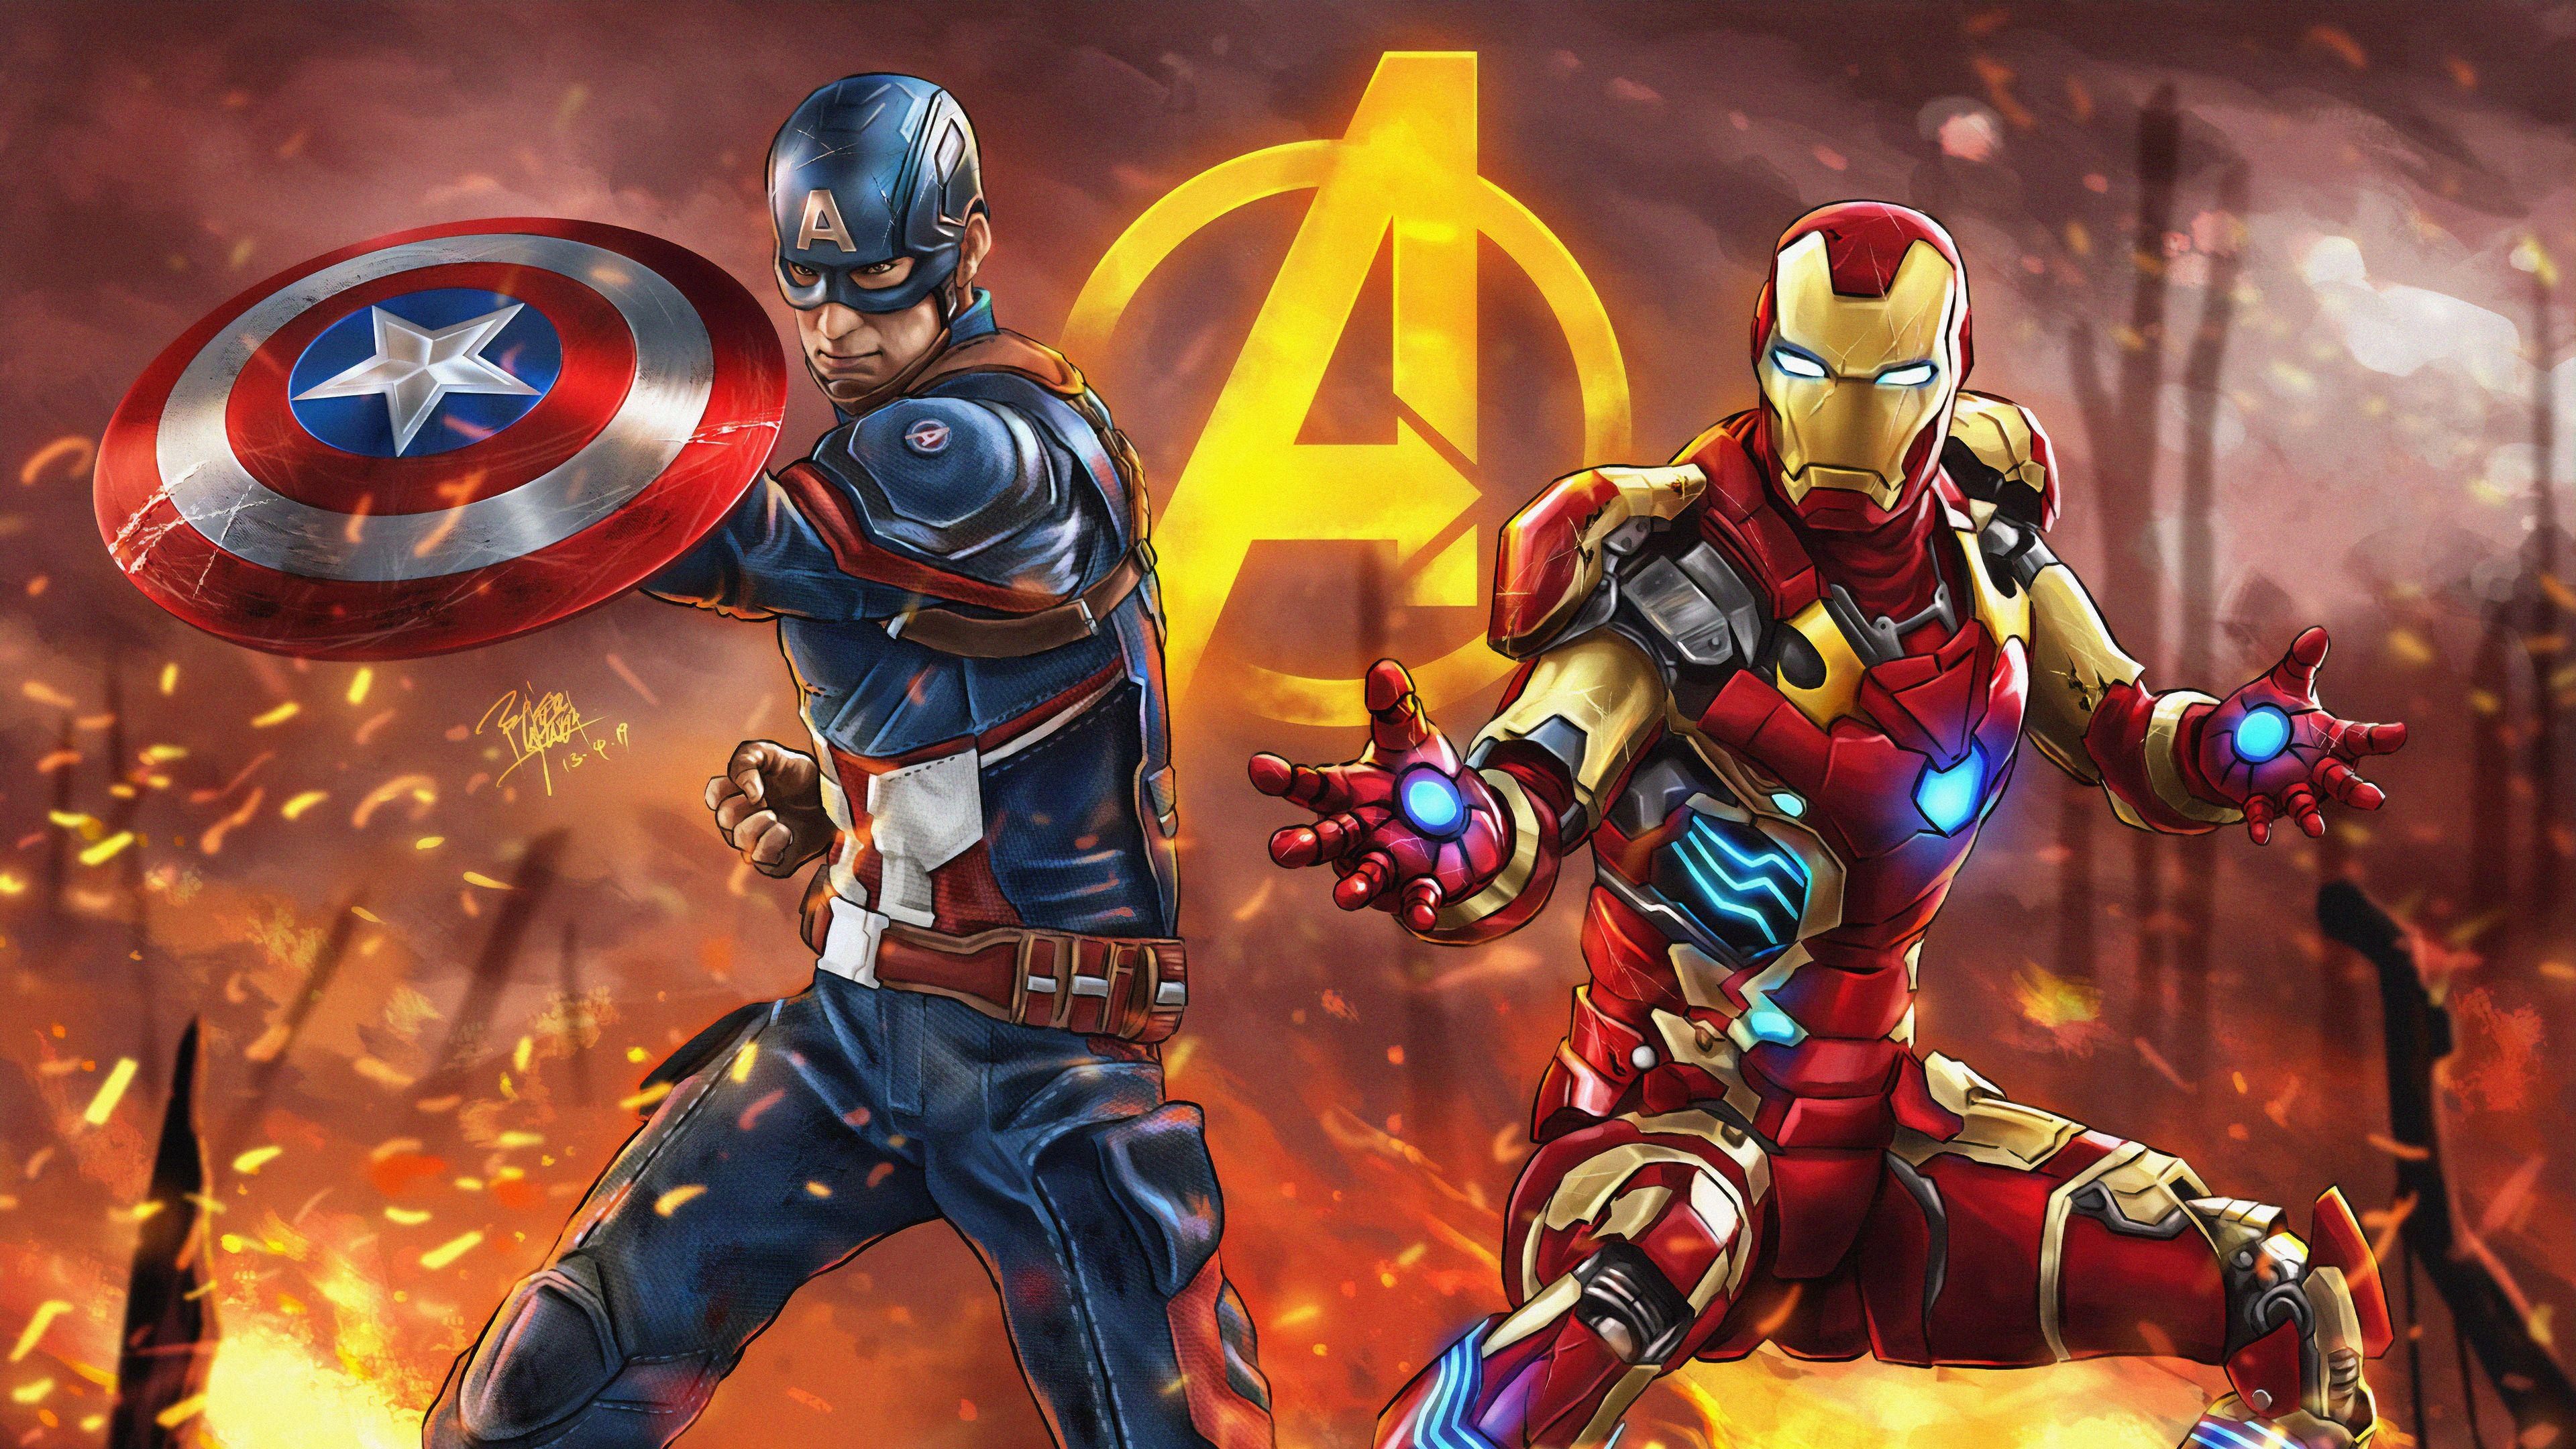 Iron Man Vs Captain America Wallpapers - Top Free Iron Man Vs Captain